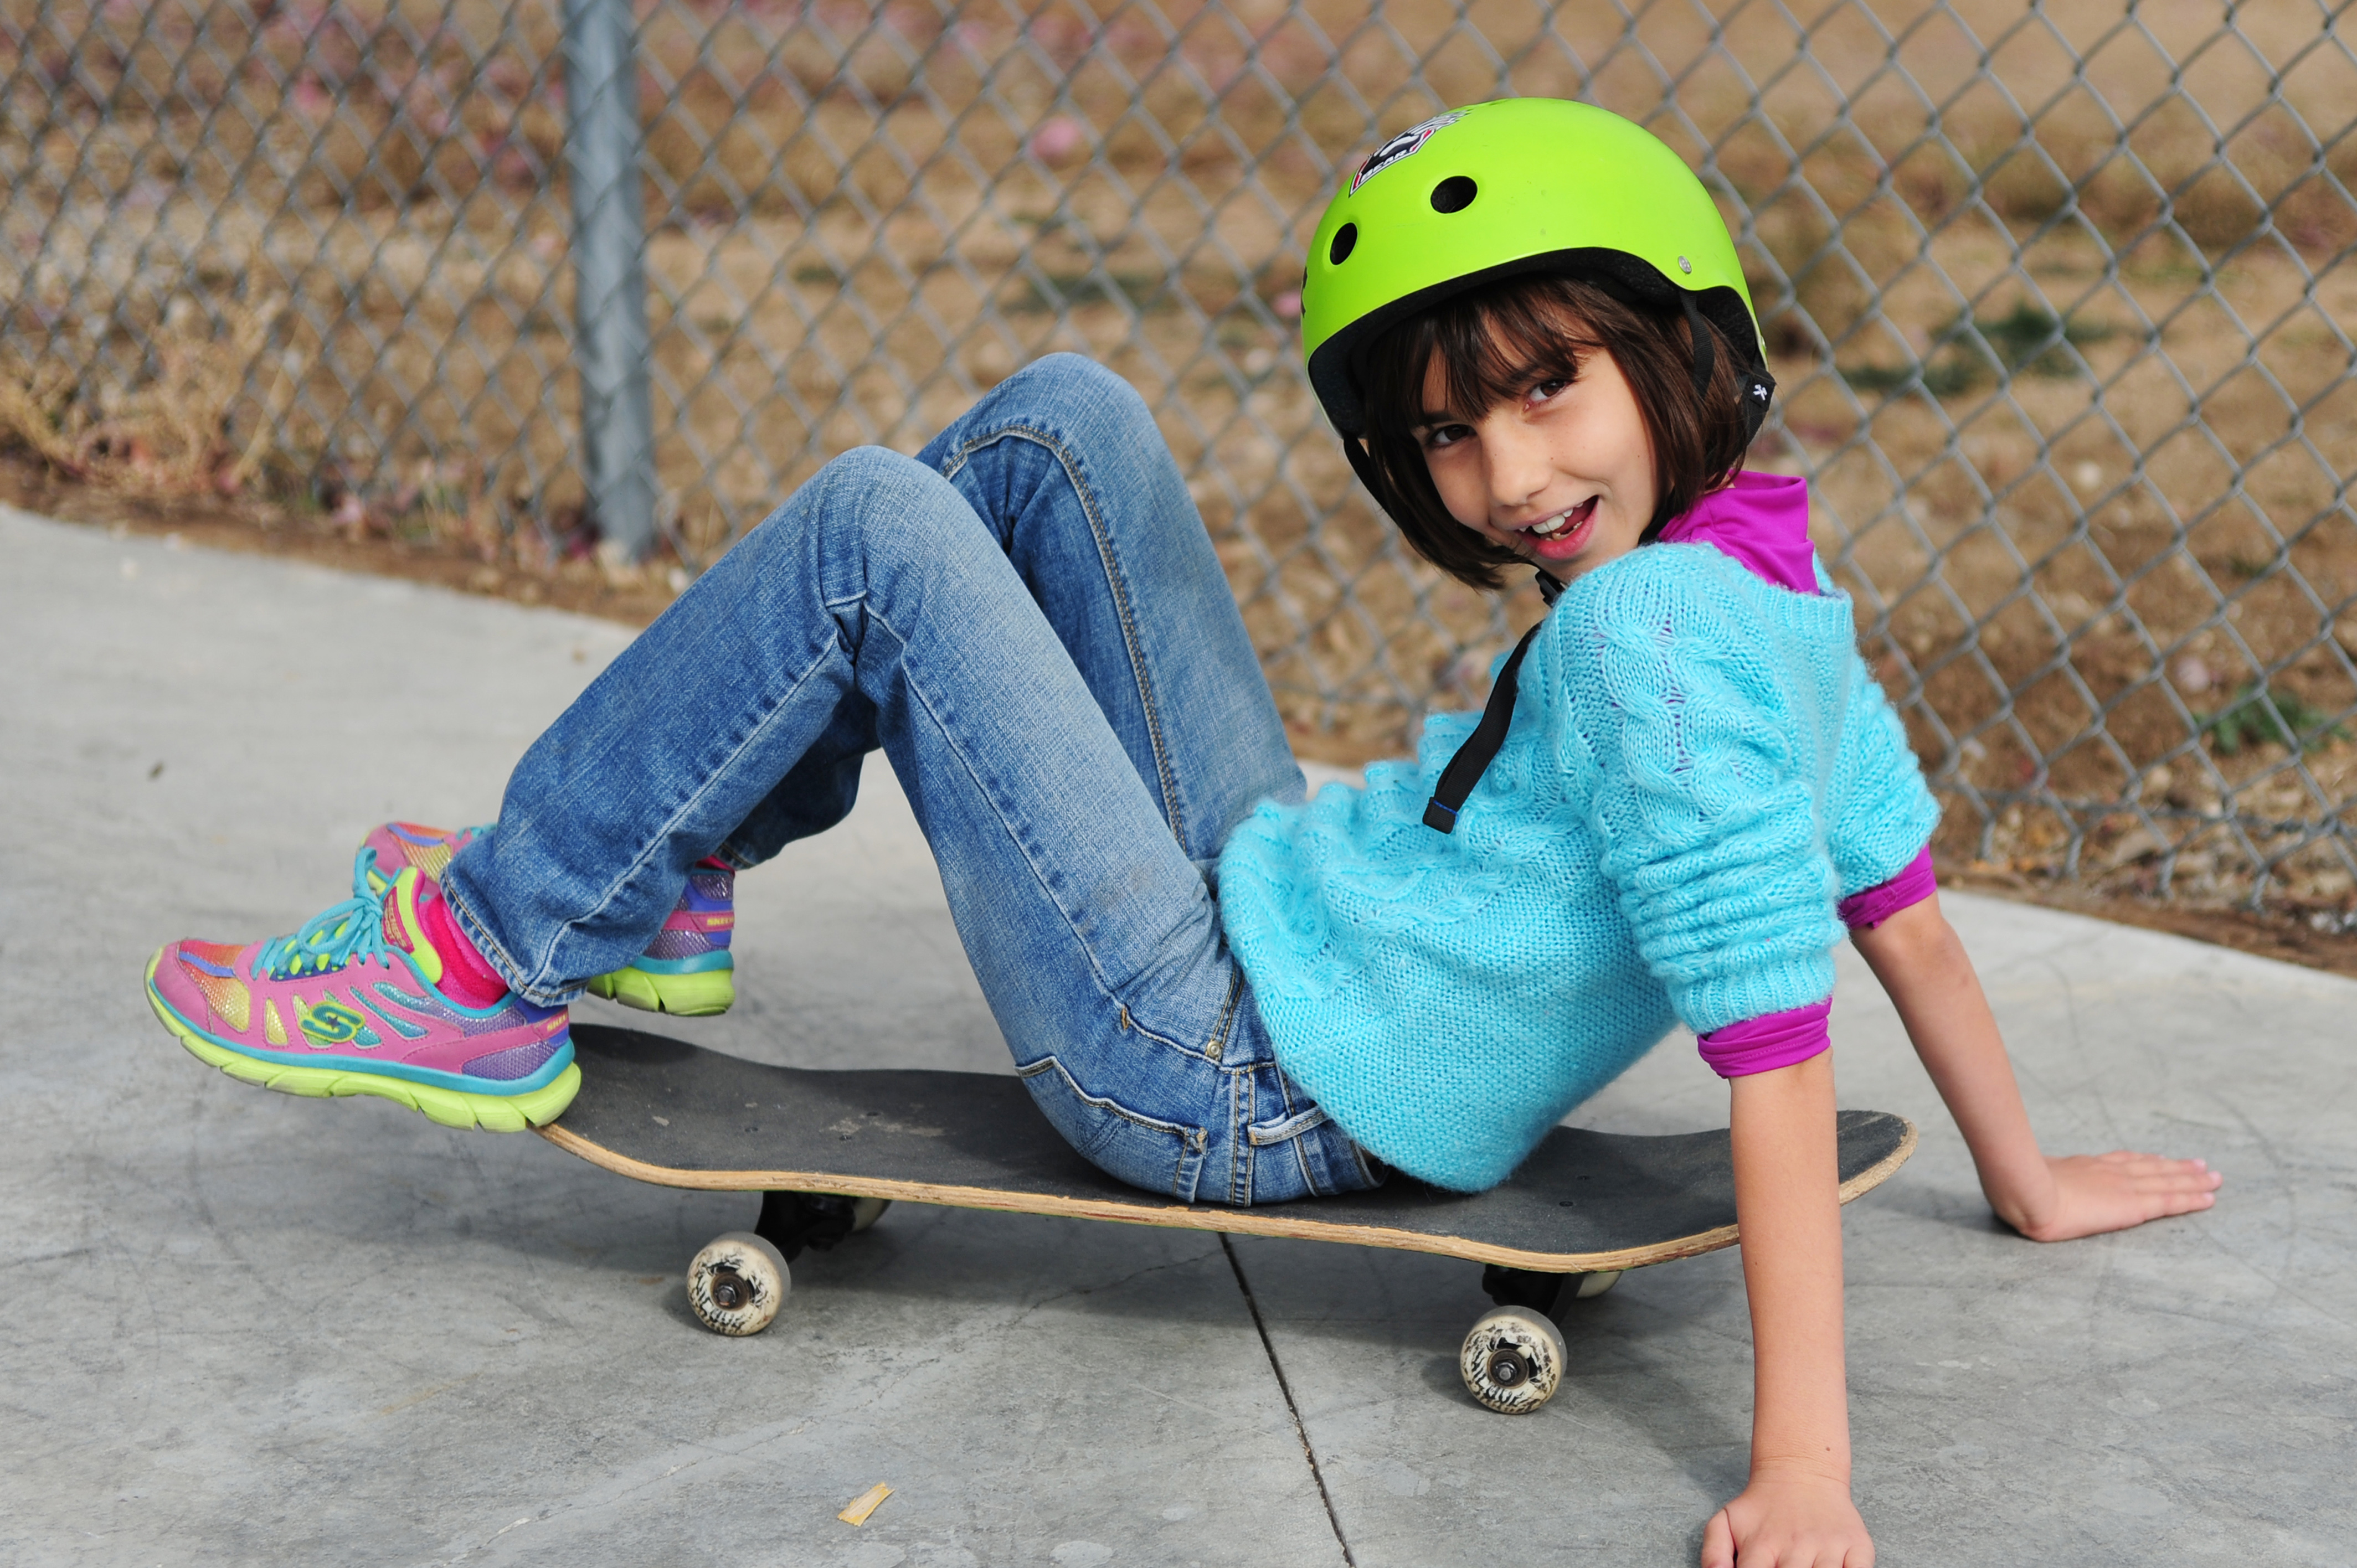 Lili learning to skateboard!